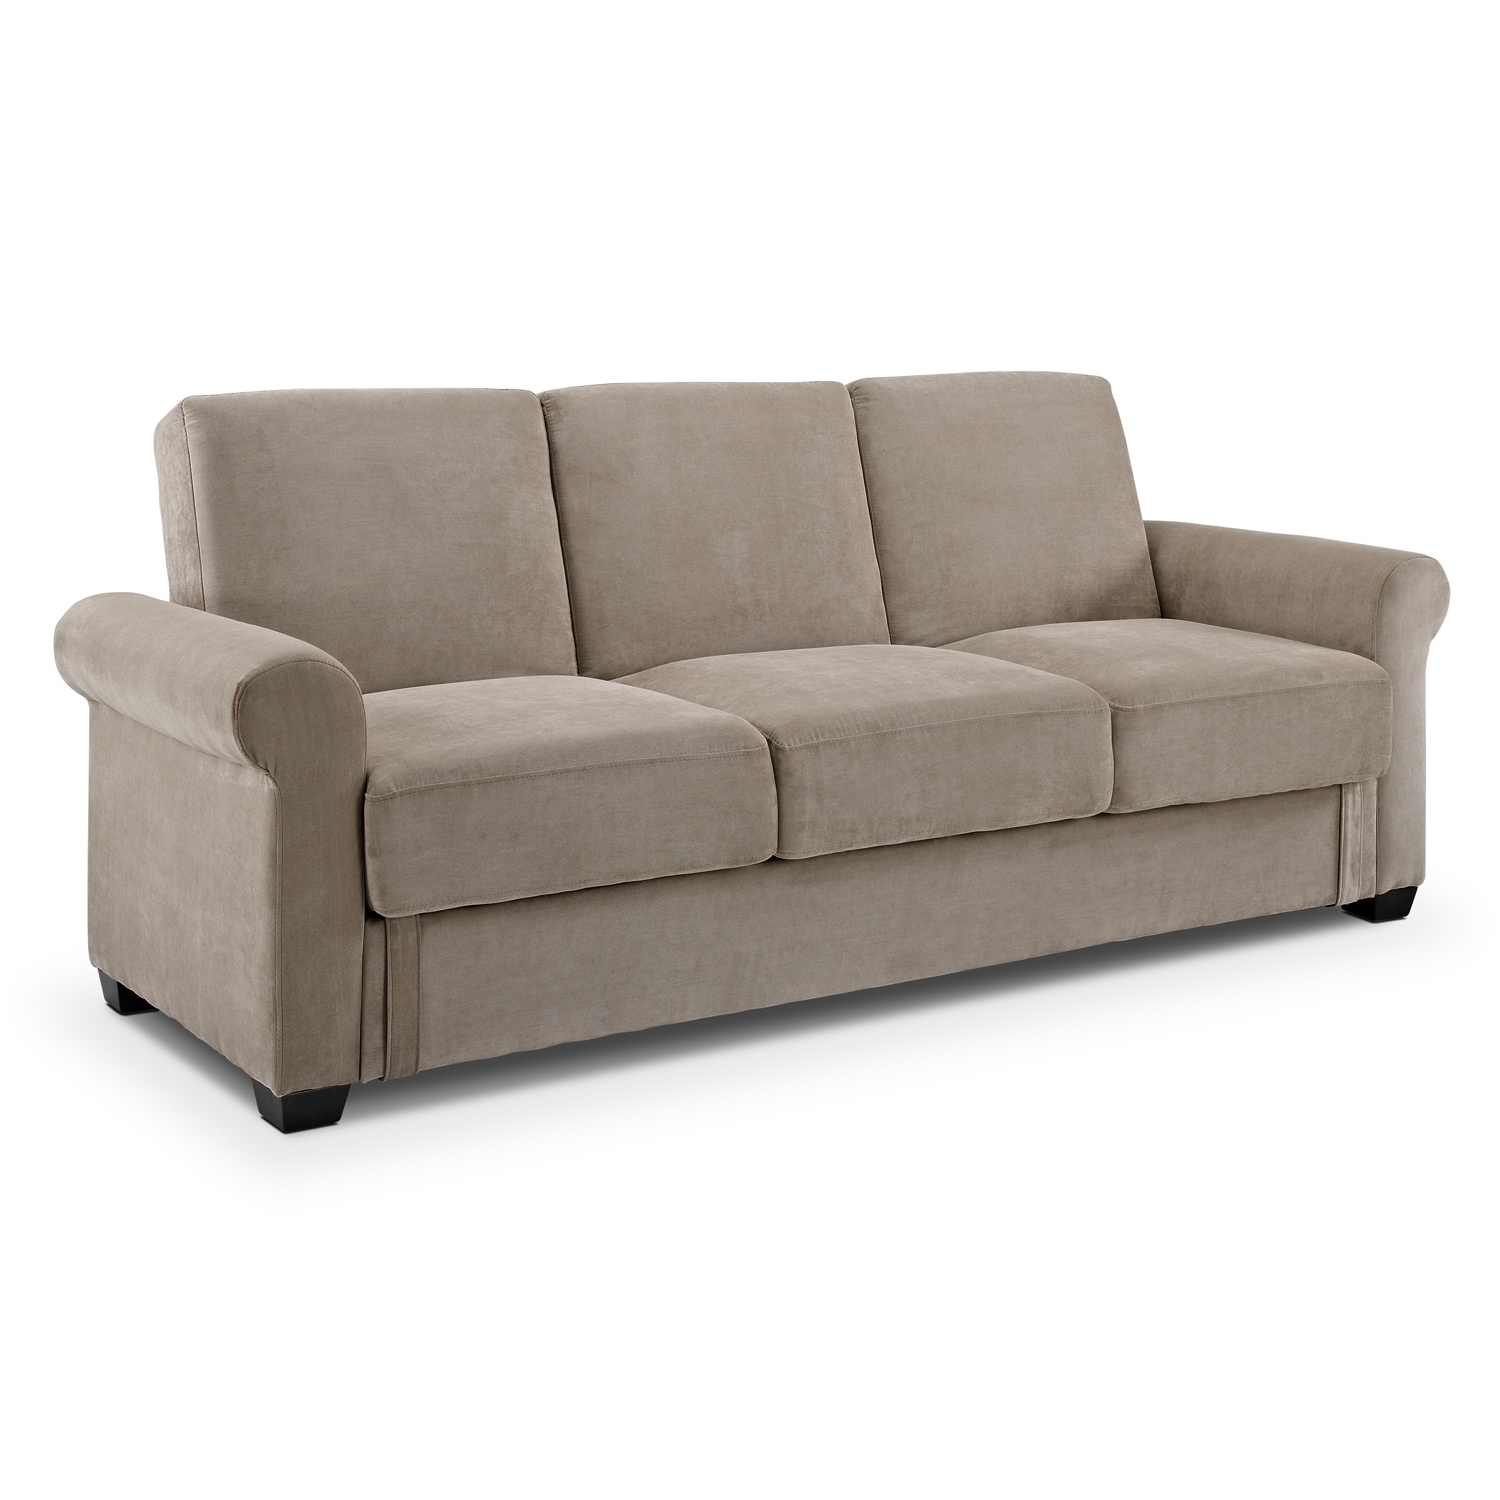 Thomas Futon Sofa Bed with Storage | Value City Furniture